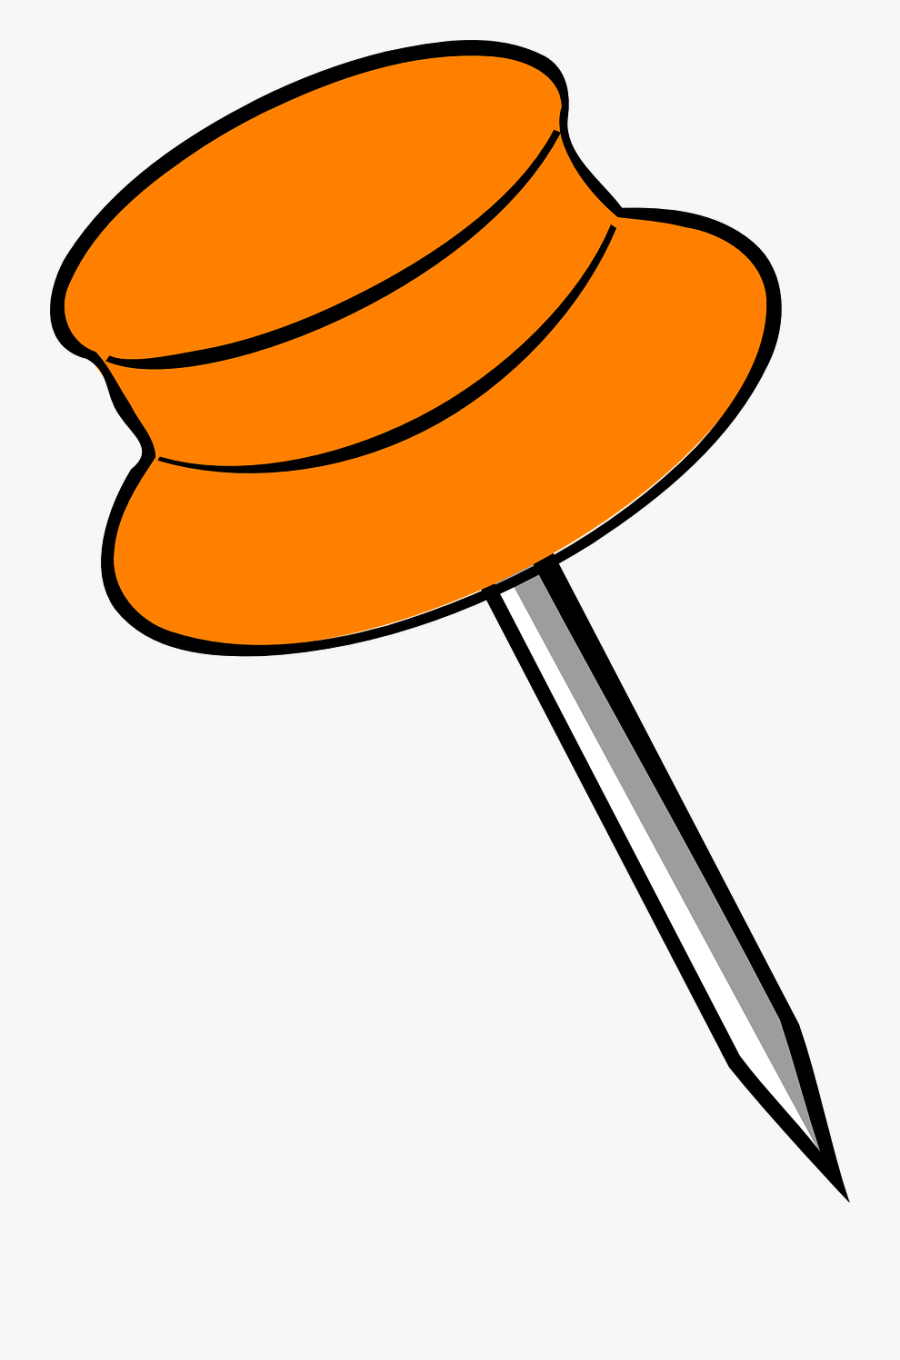 Orange Pin, Pin, Pushpin, Thumbtack, Office Supplies - Pin Clipart, Transparent Clipart